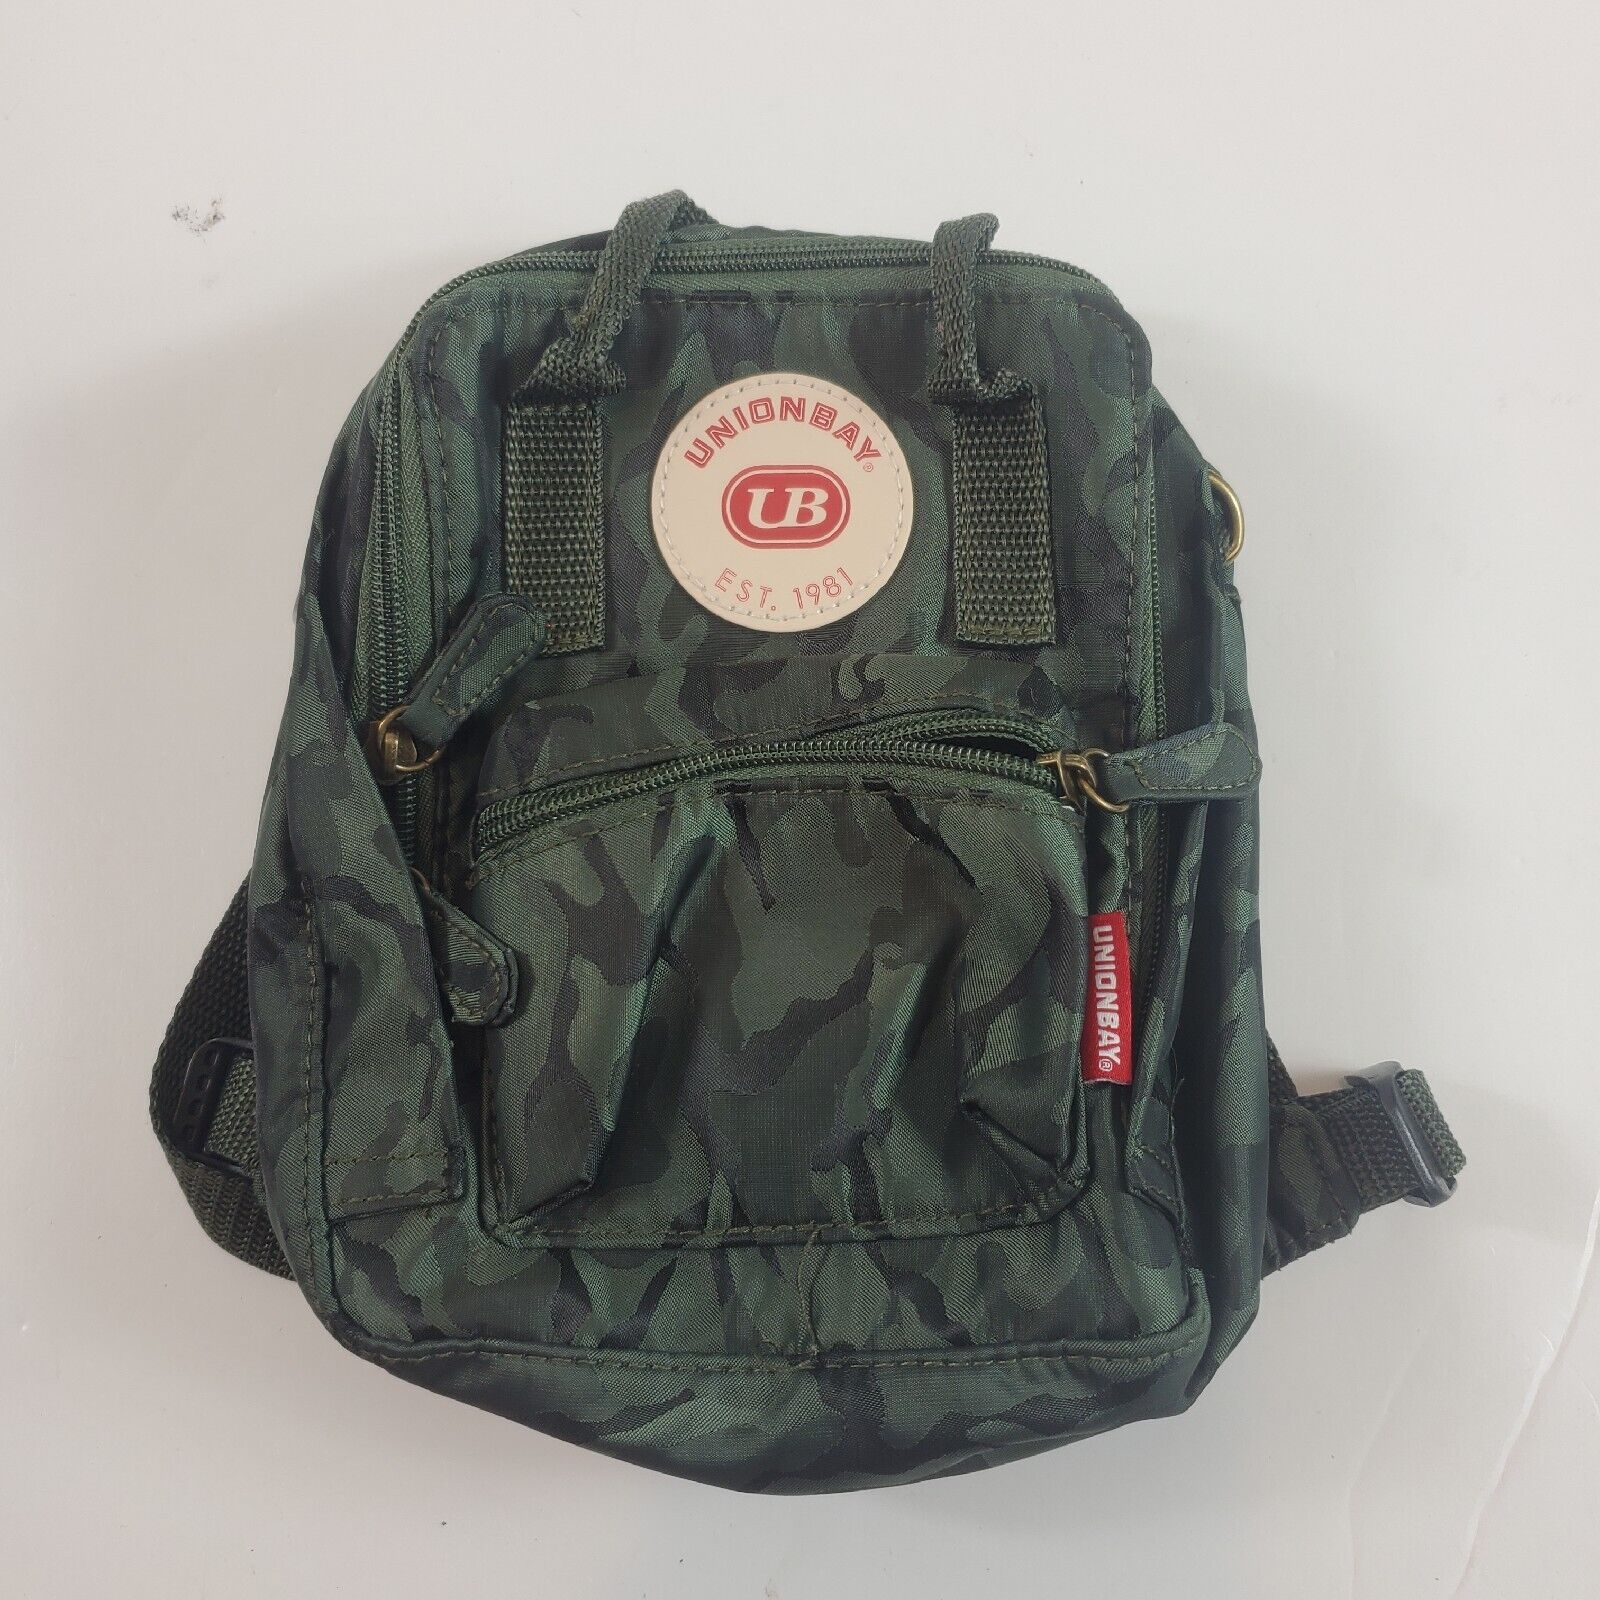 unionbay purse backpack green camo mini flaw